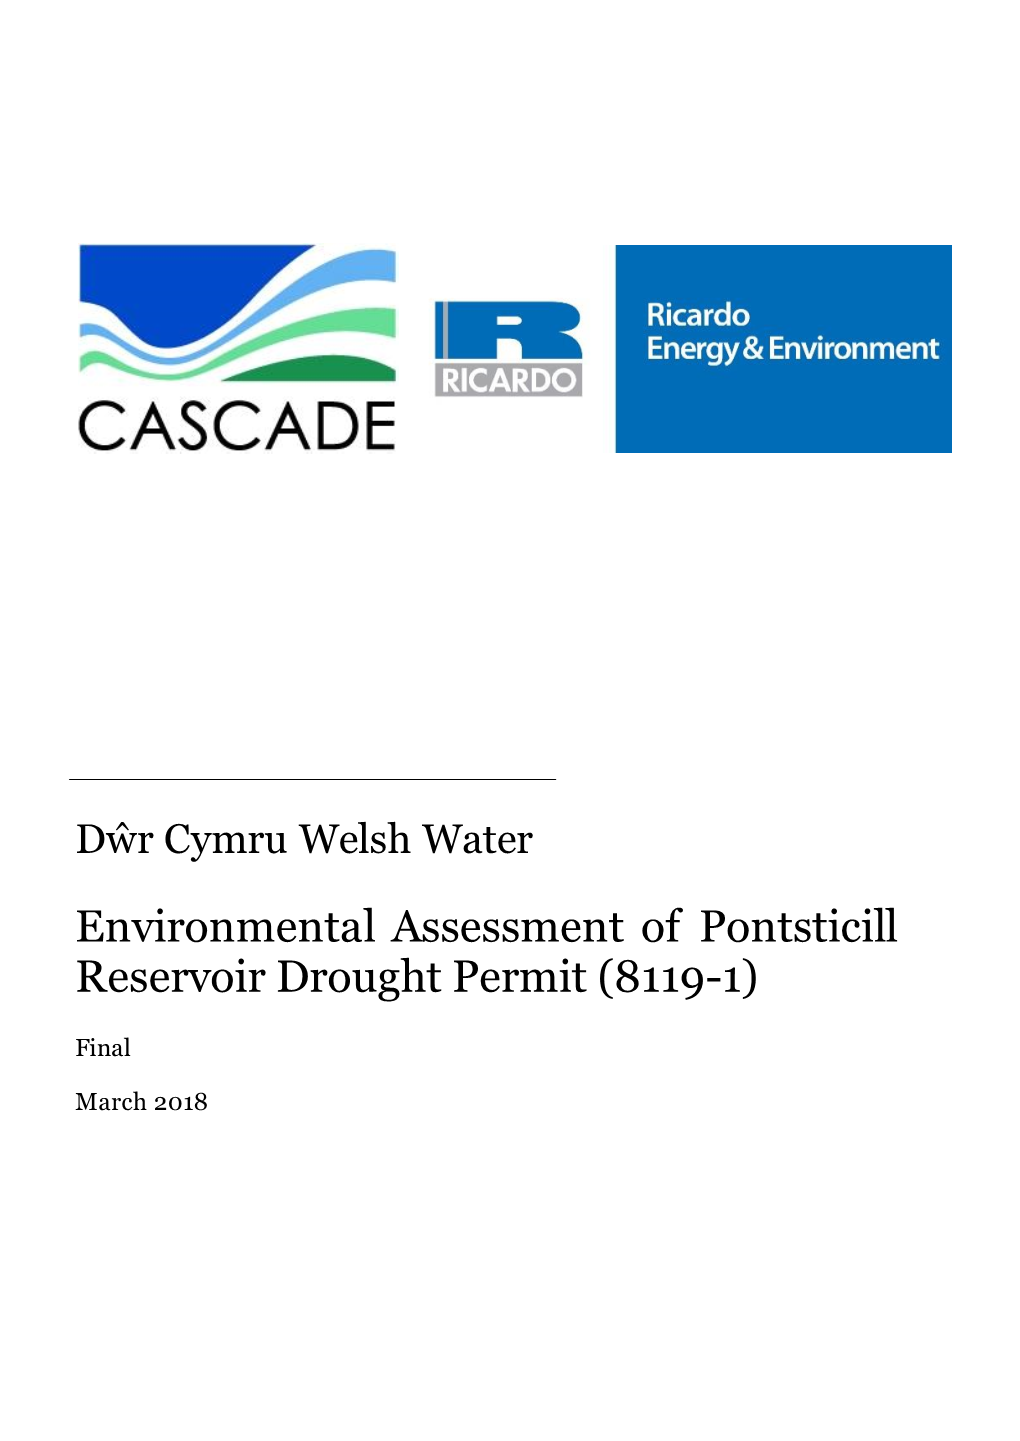 Environmental Assessment of Pontsticill Reservoir Drought Permit (8119-1)